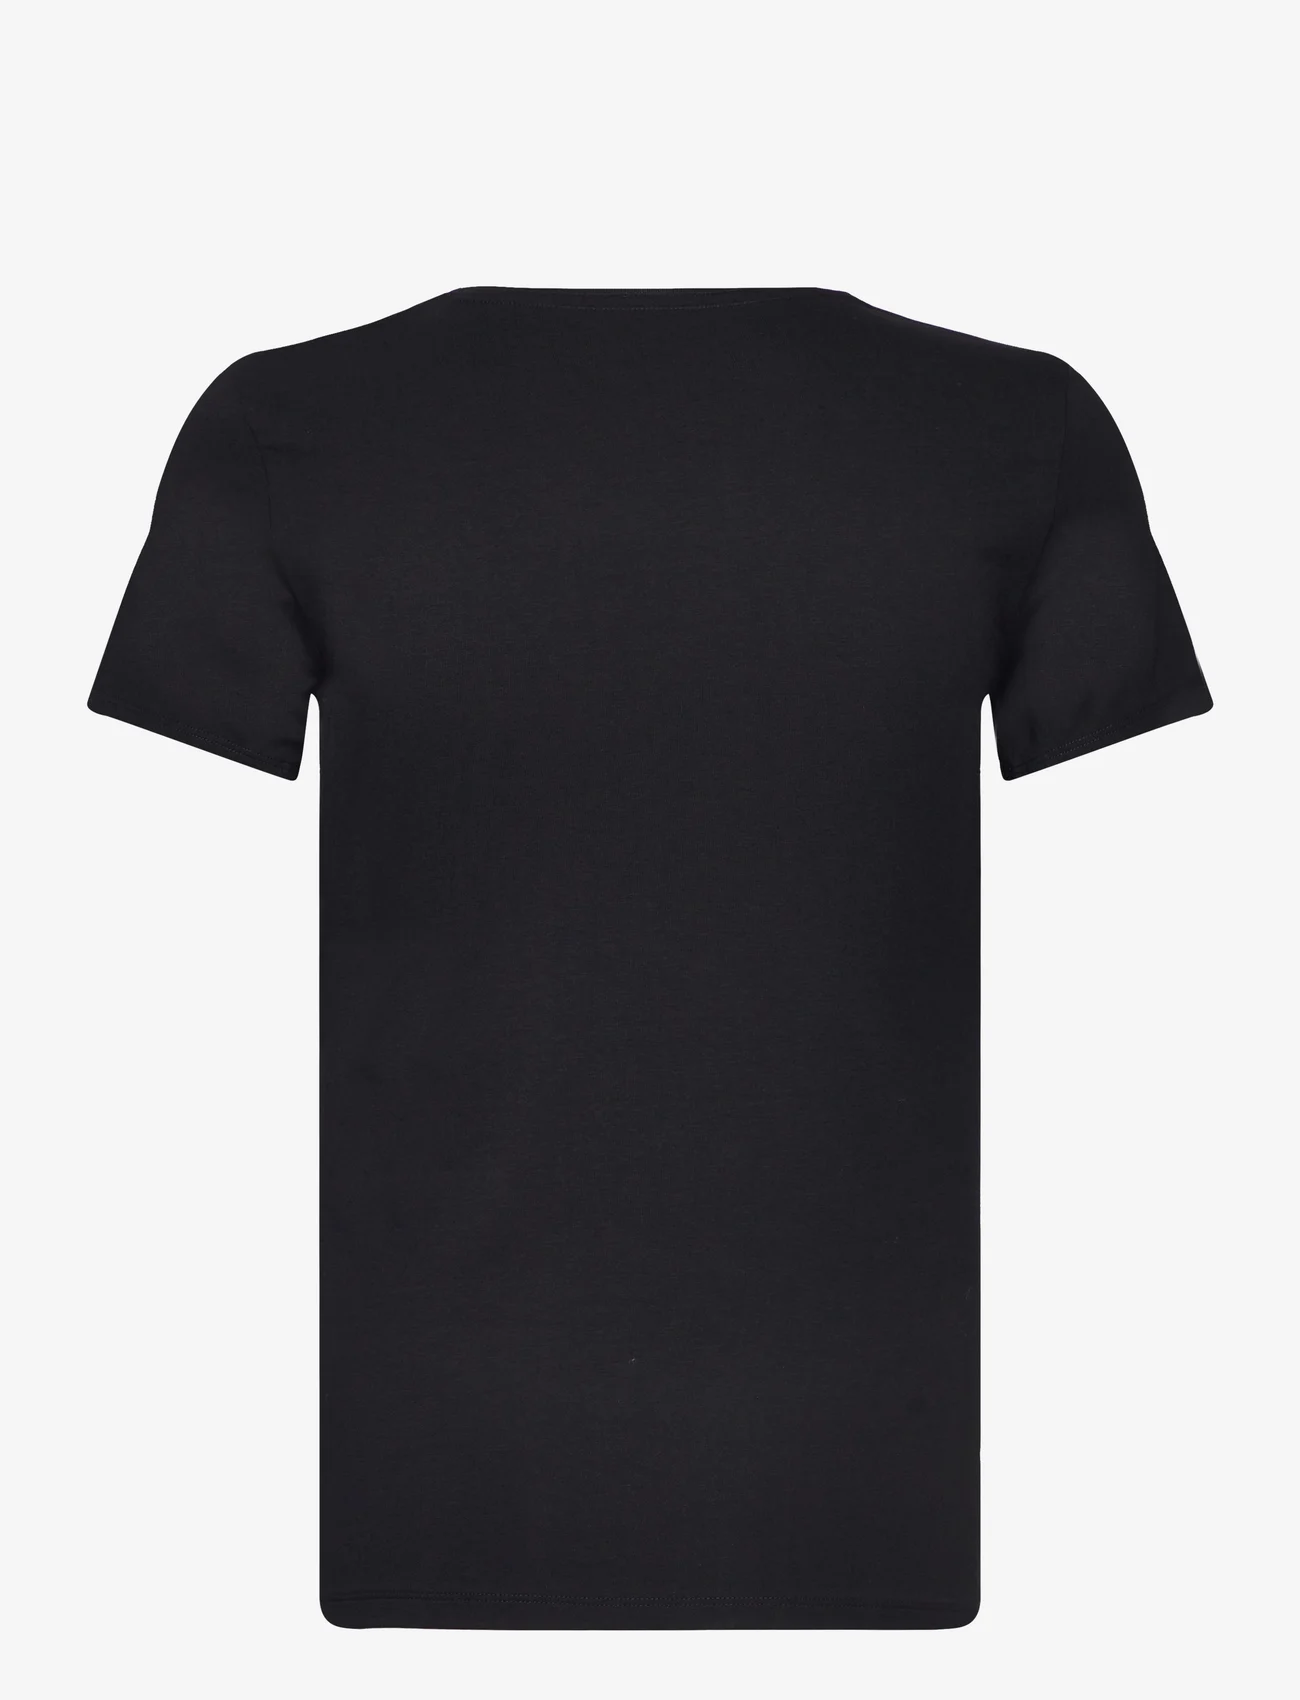 Bread & Boxers - Crew Neck slim - t-shirt & tops - black - 1